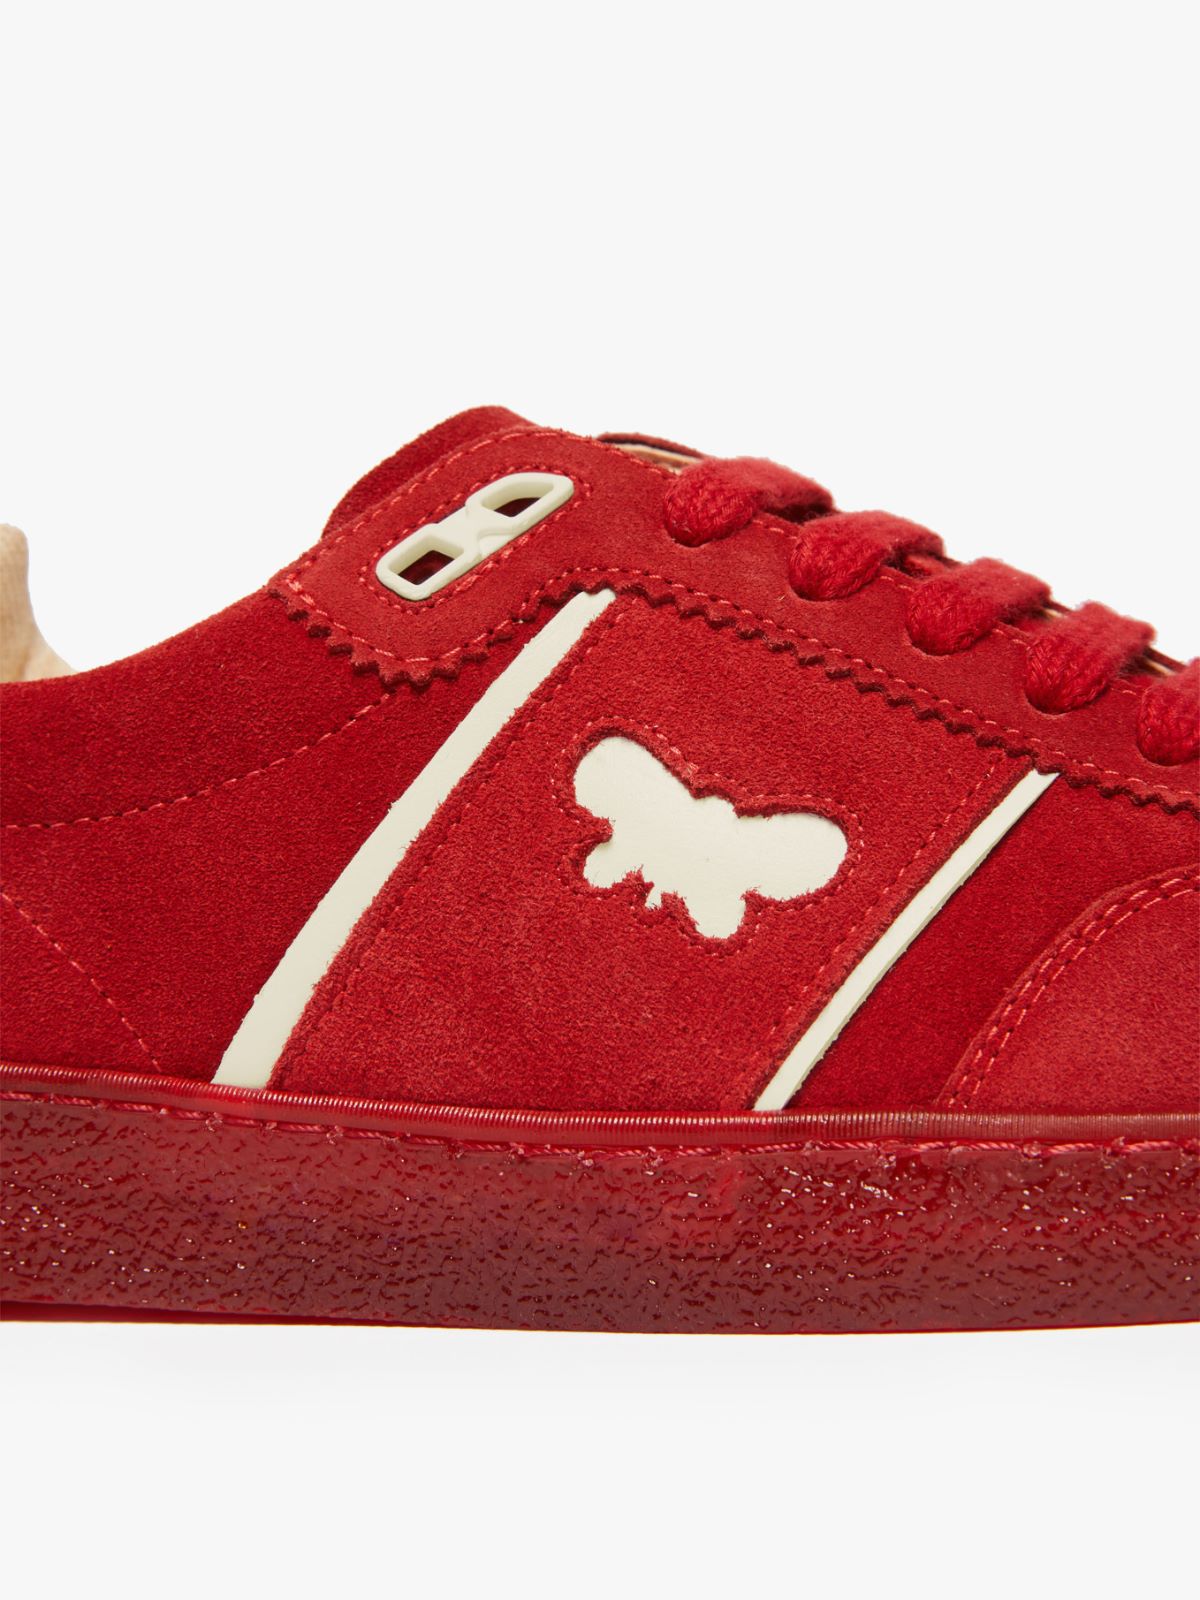 Leather sneakers - RED - Weekend Max Mara - 5